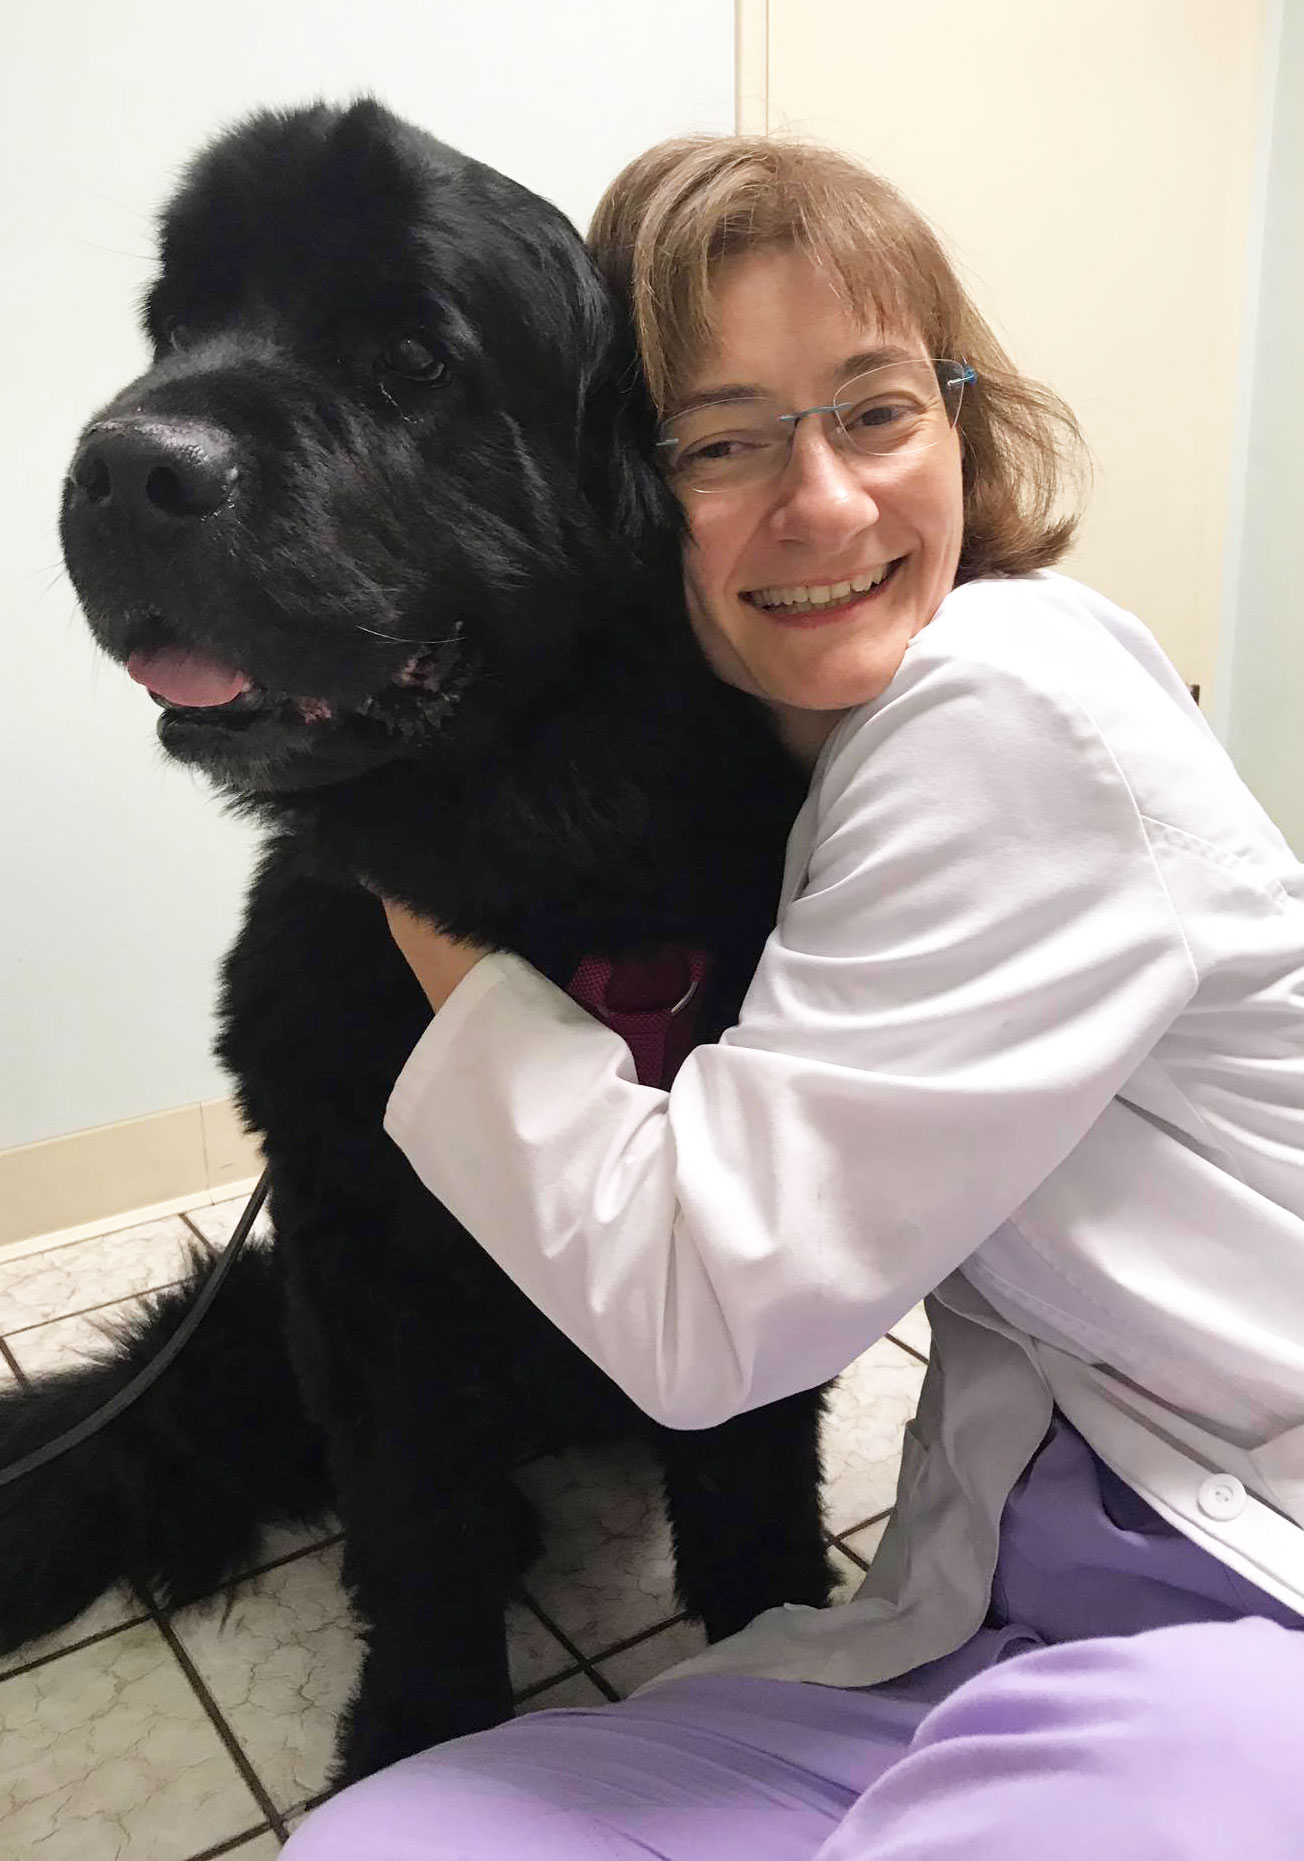 Dr. Nicoleta Popescu sitting on the floor, smiling and hugging a large black Newfoundland dog.